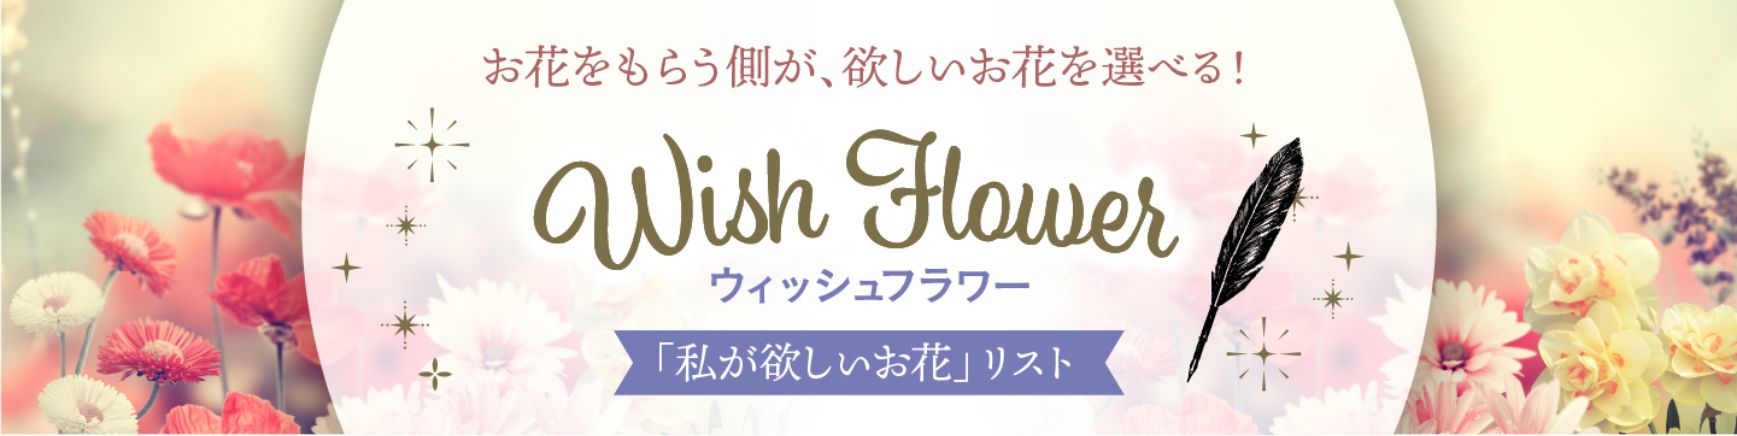 特集: Wish Flower